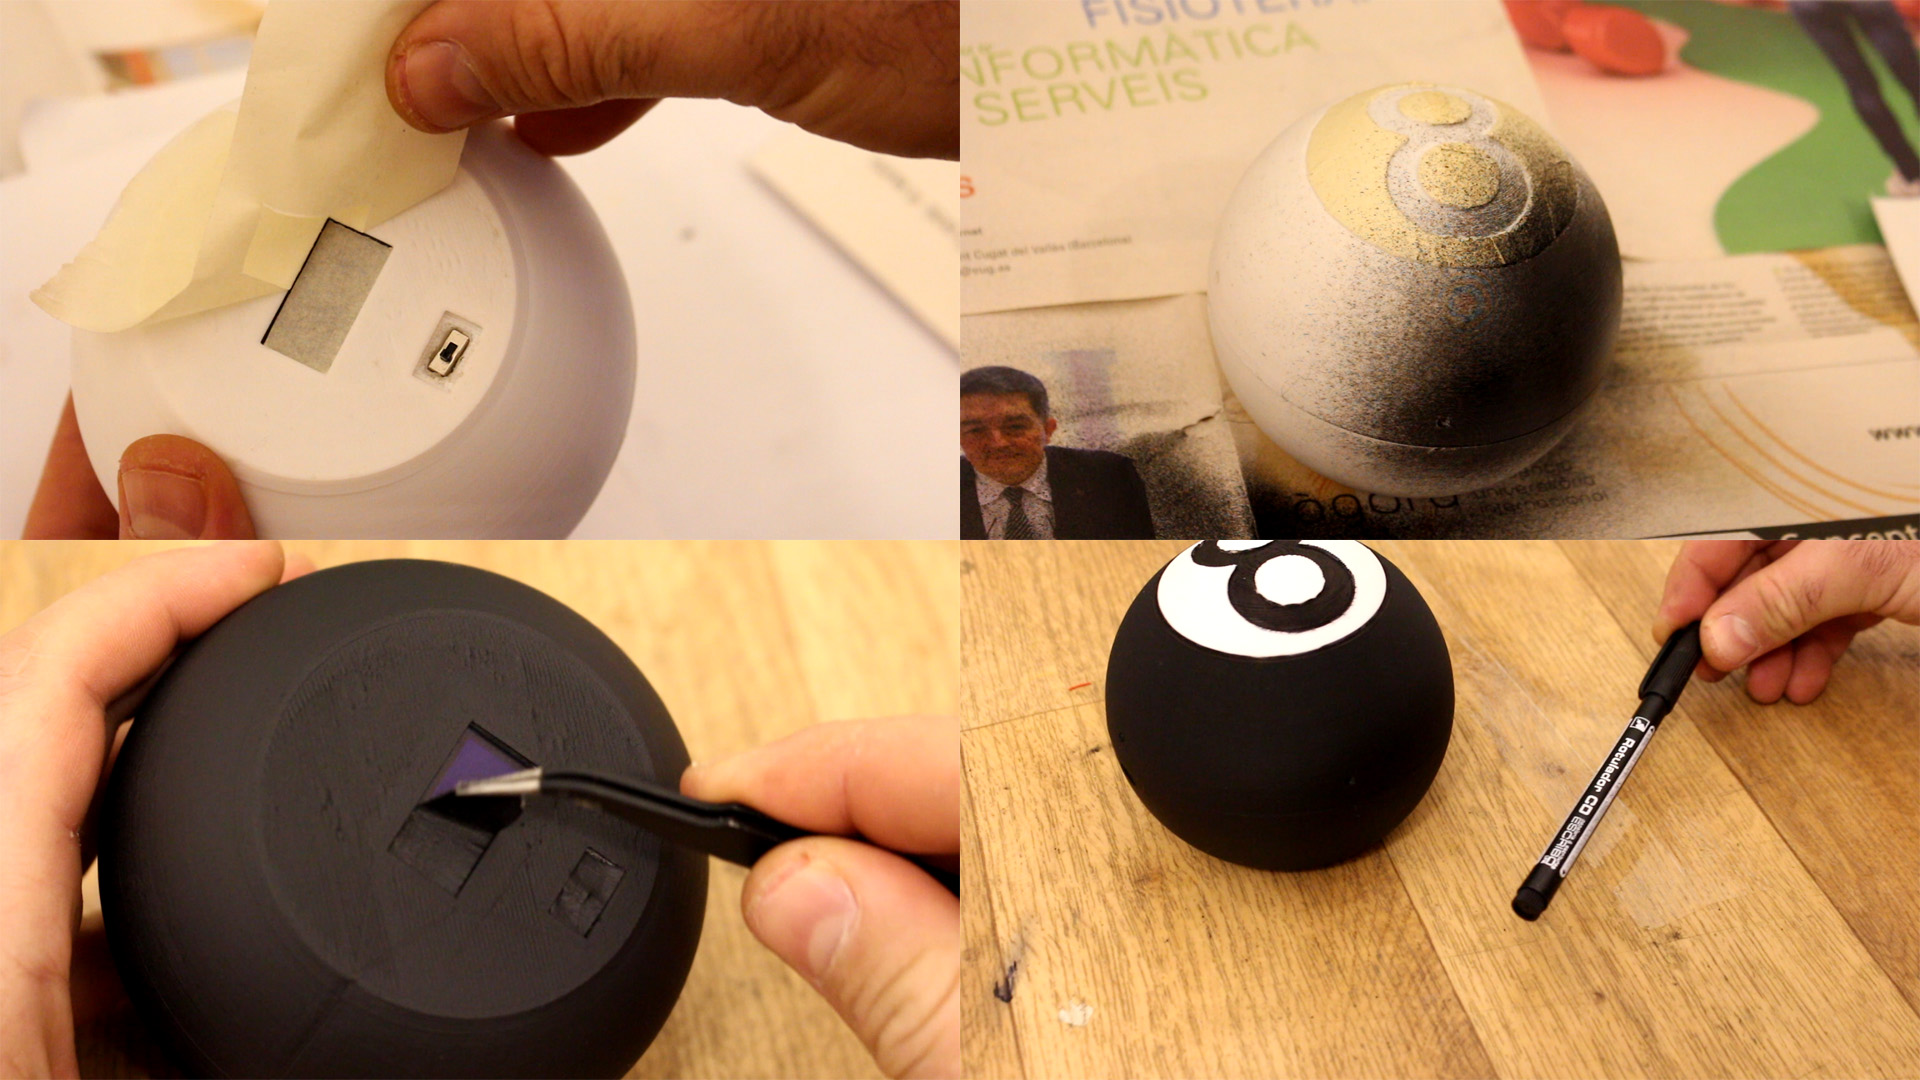 Arduino digital magic ball with sounds